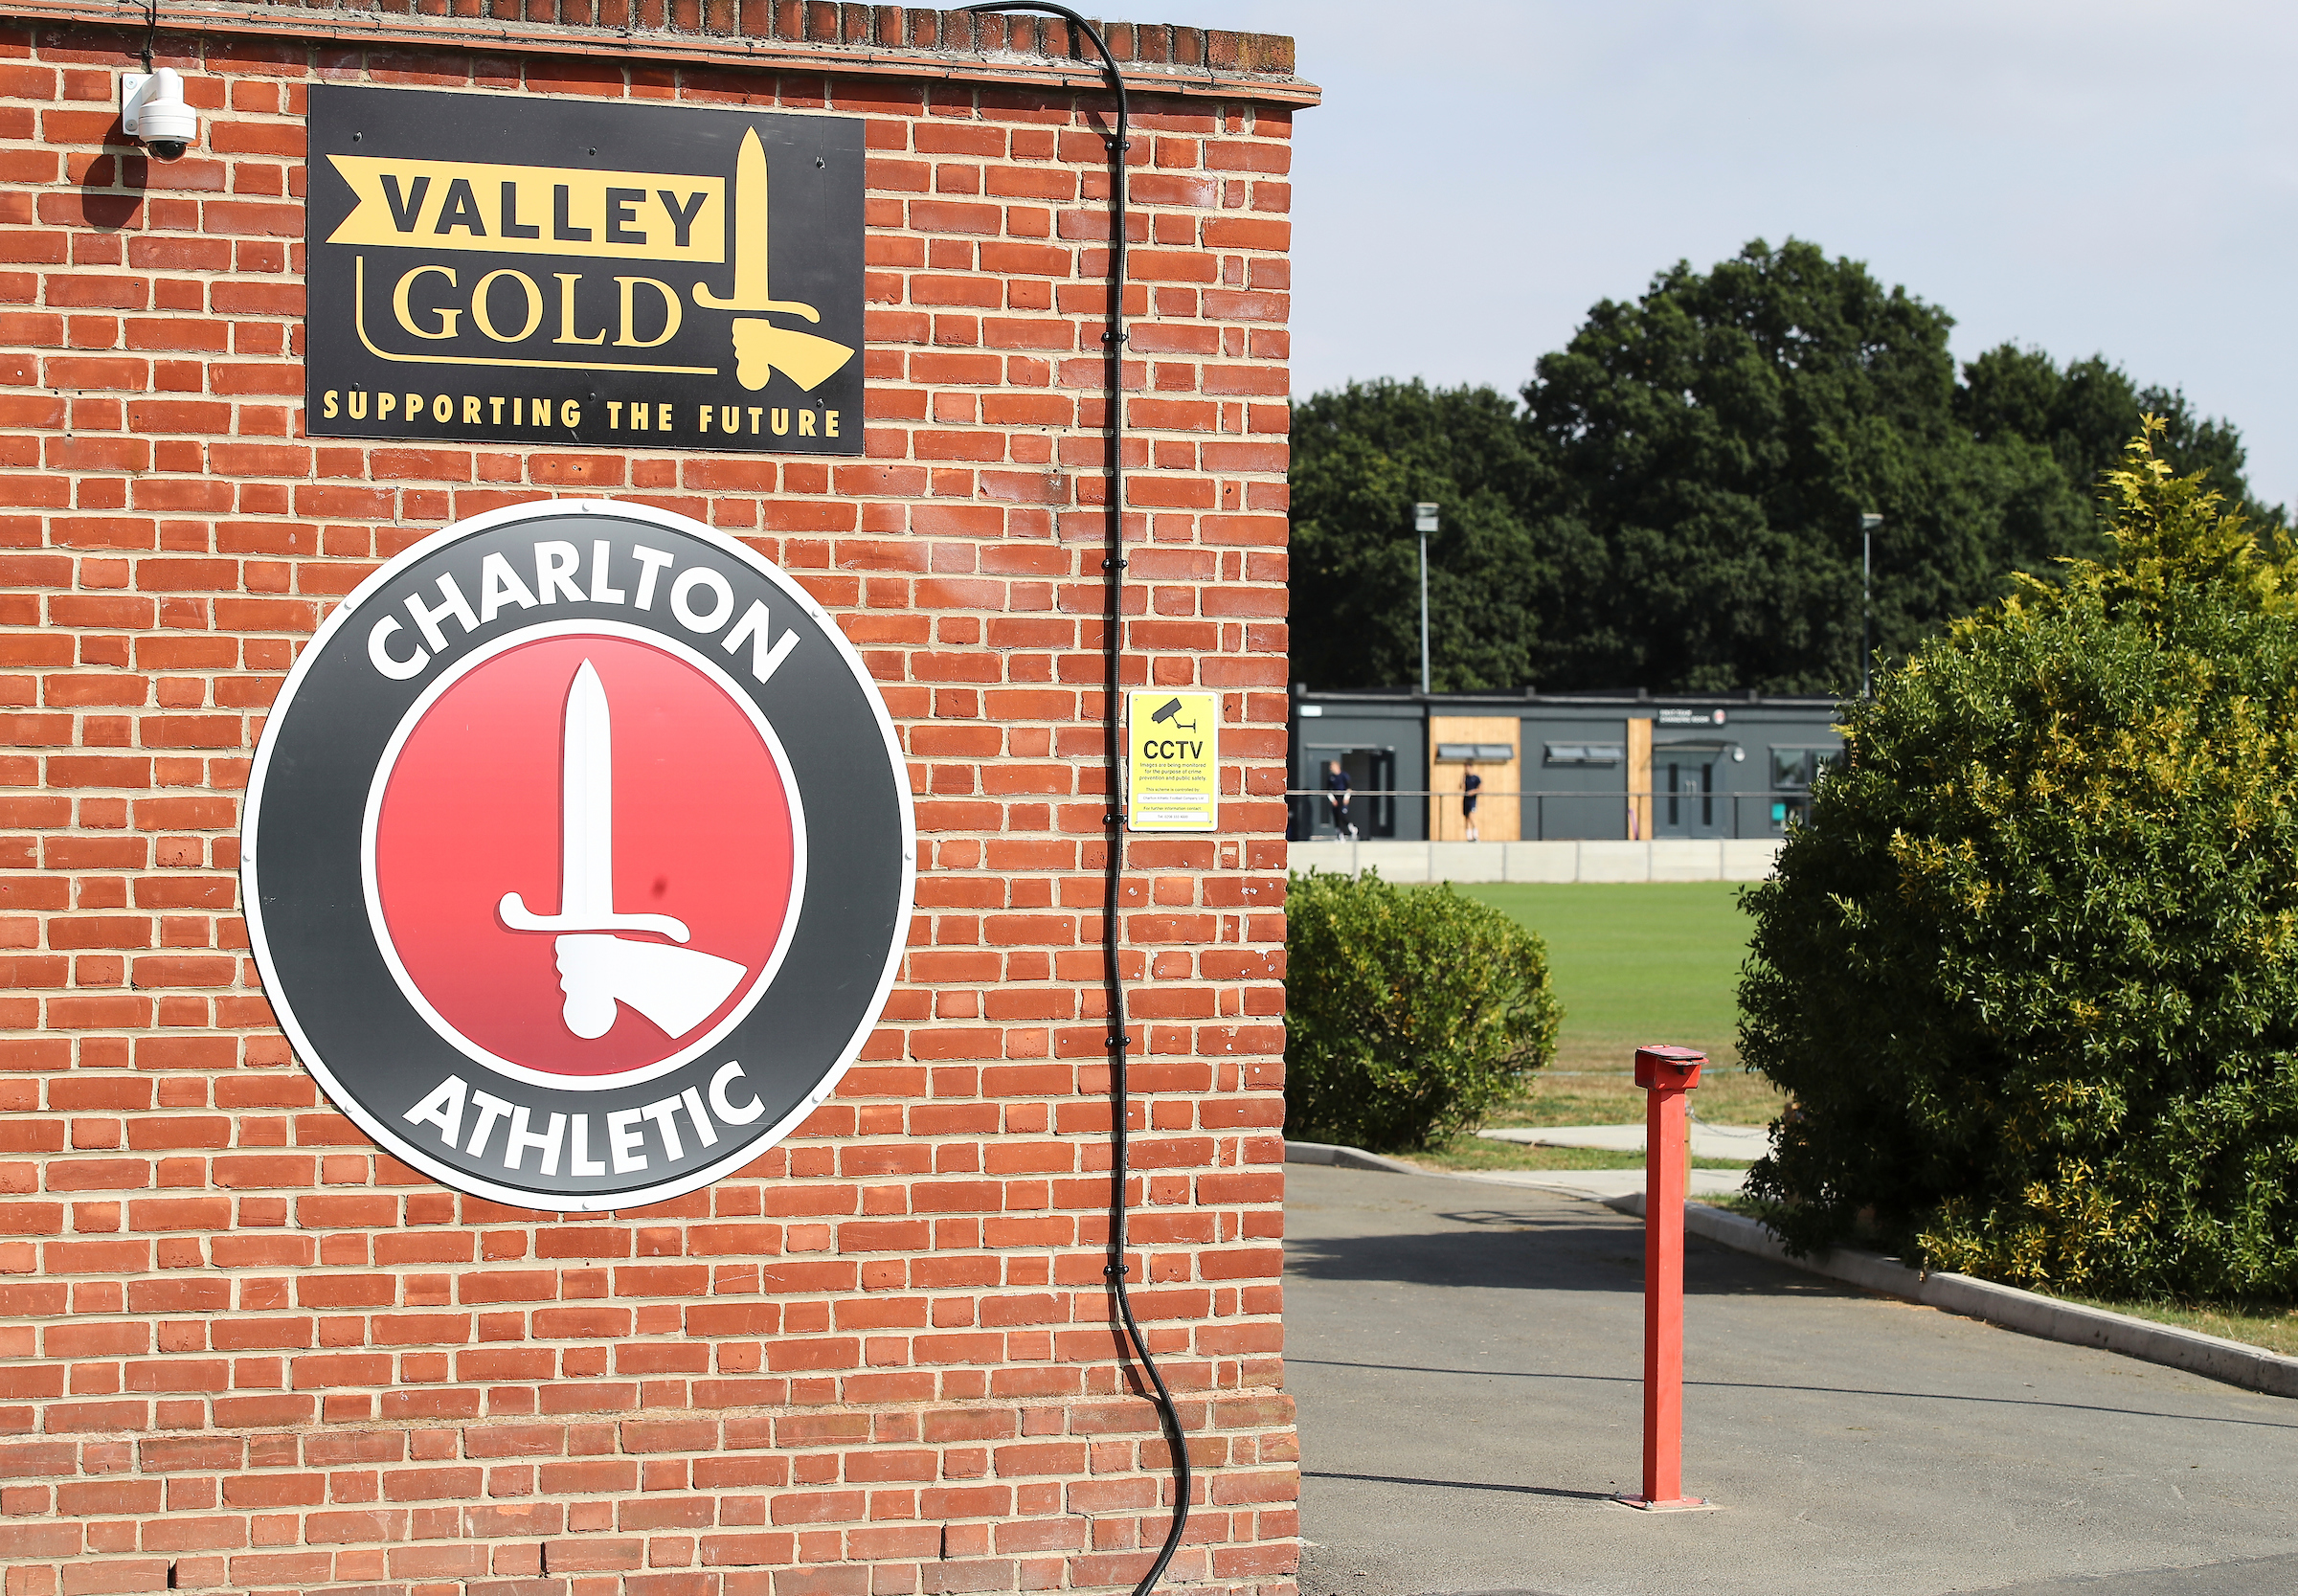 Valley Gold logo above Charlton badge